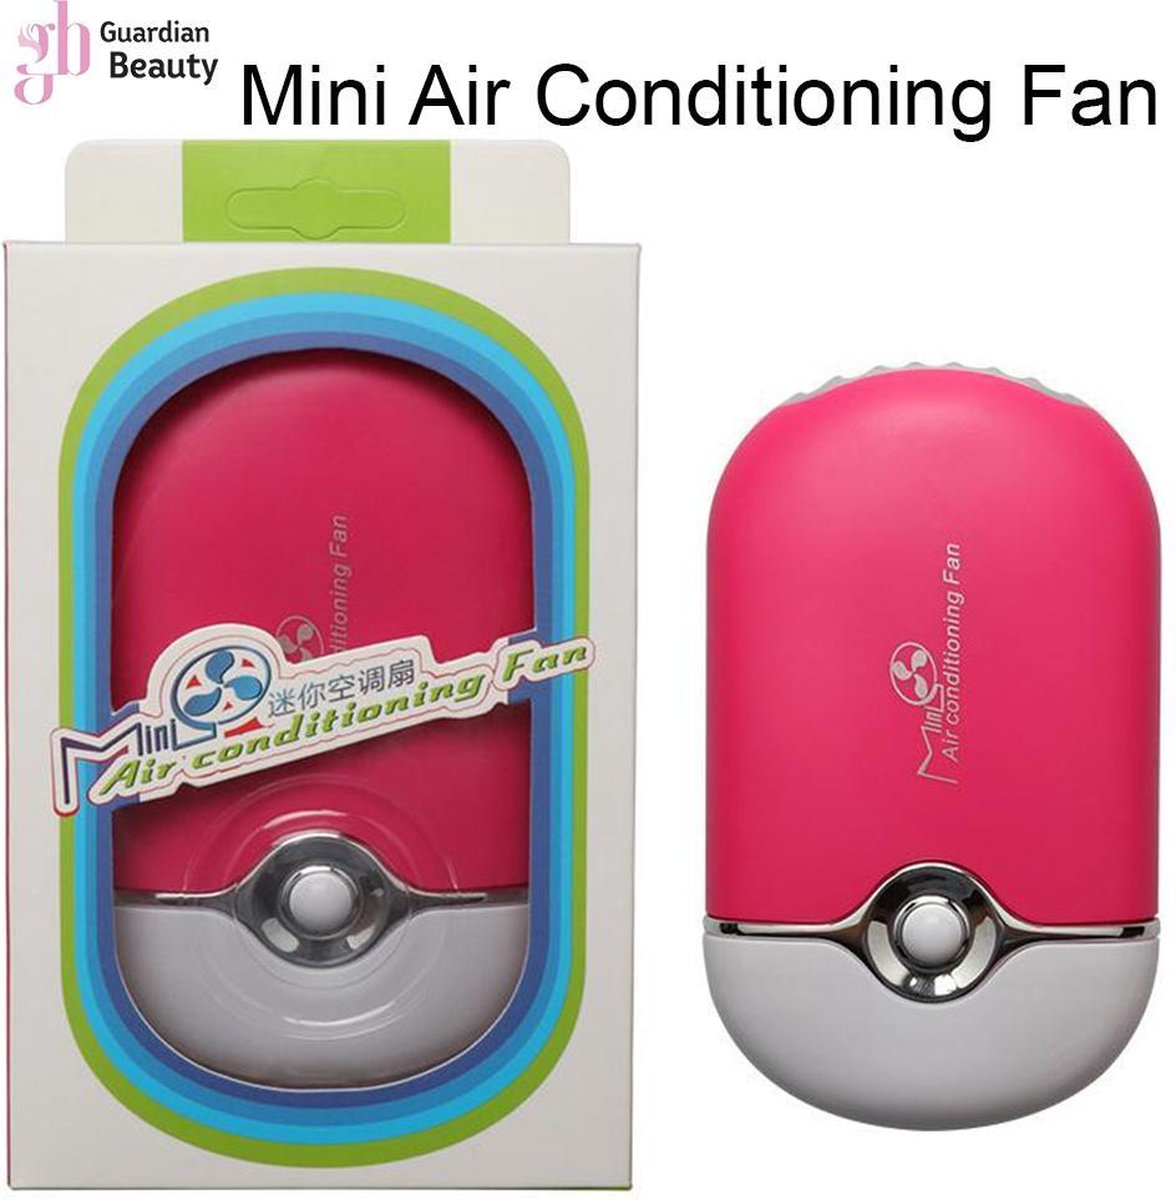 ventilator voor wimpers startpakket | Wimpers Extension Fan | Mini Air Conditioning Fan